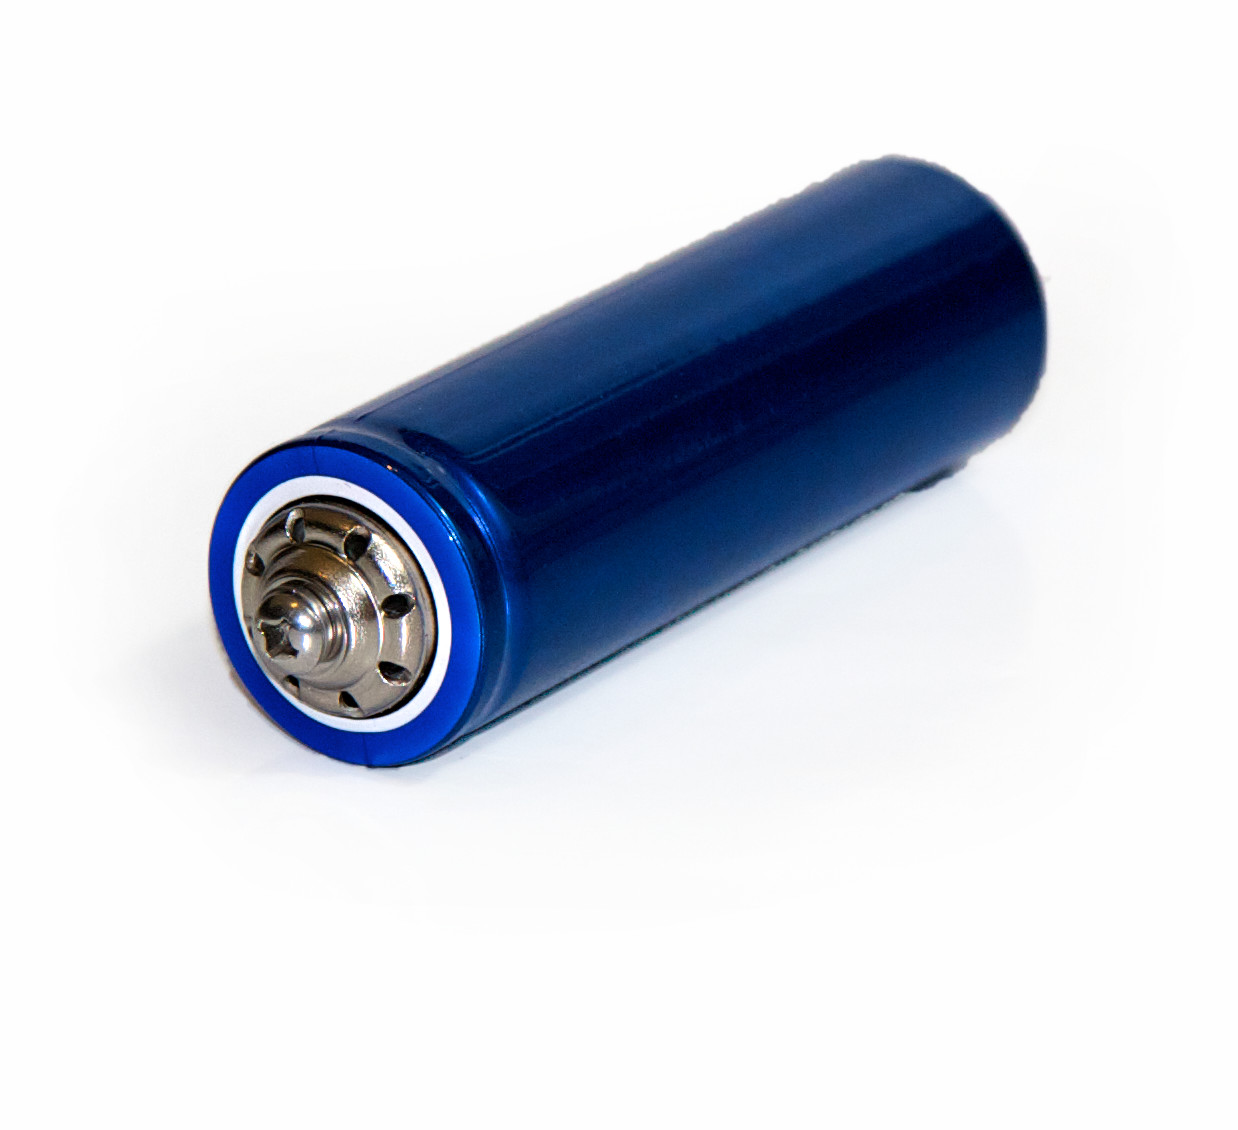 LiFePO4 Akku 24V 6Ah Lithium-Eisen-Phosphat Batterie, 199,00 €